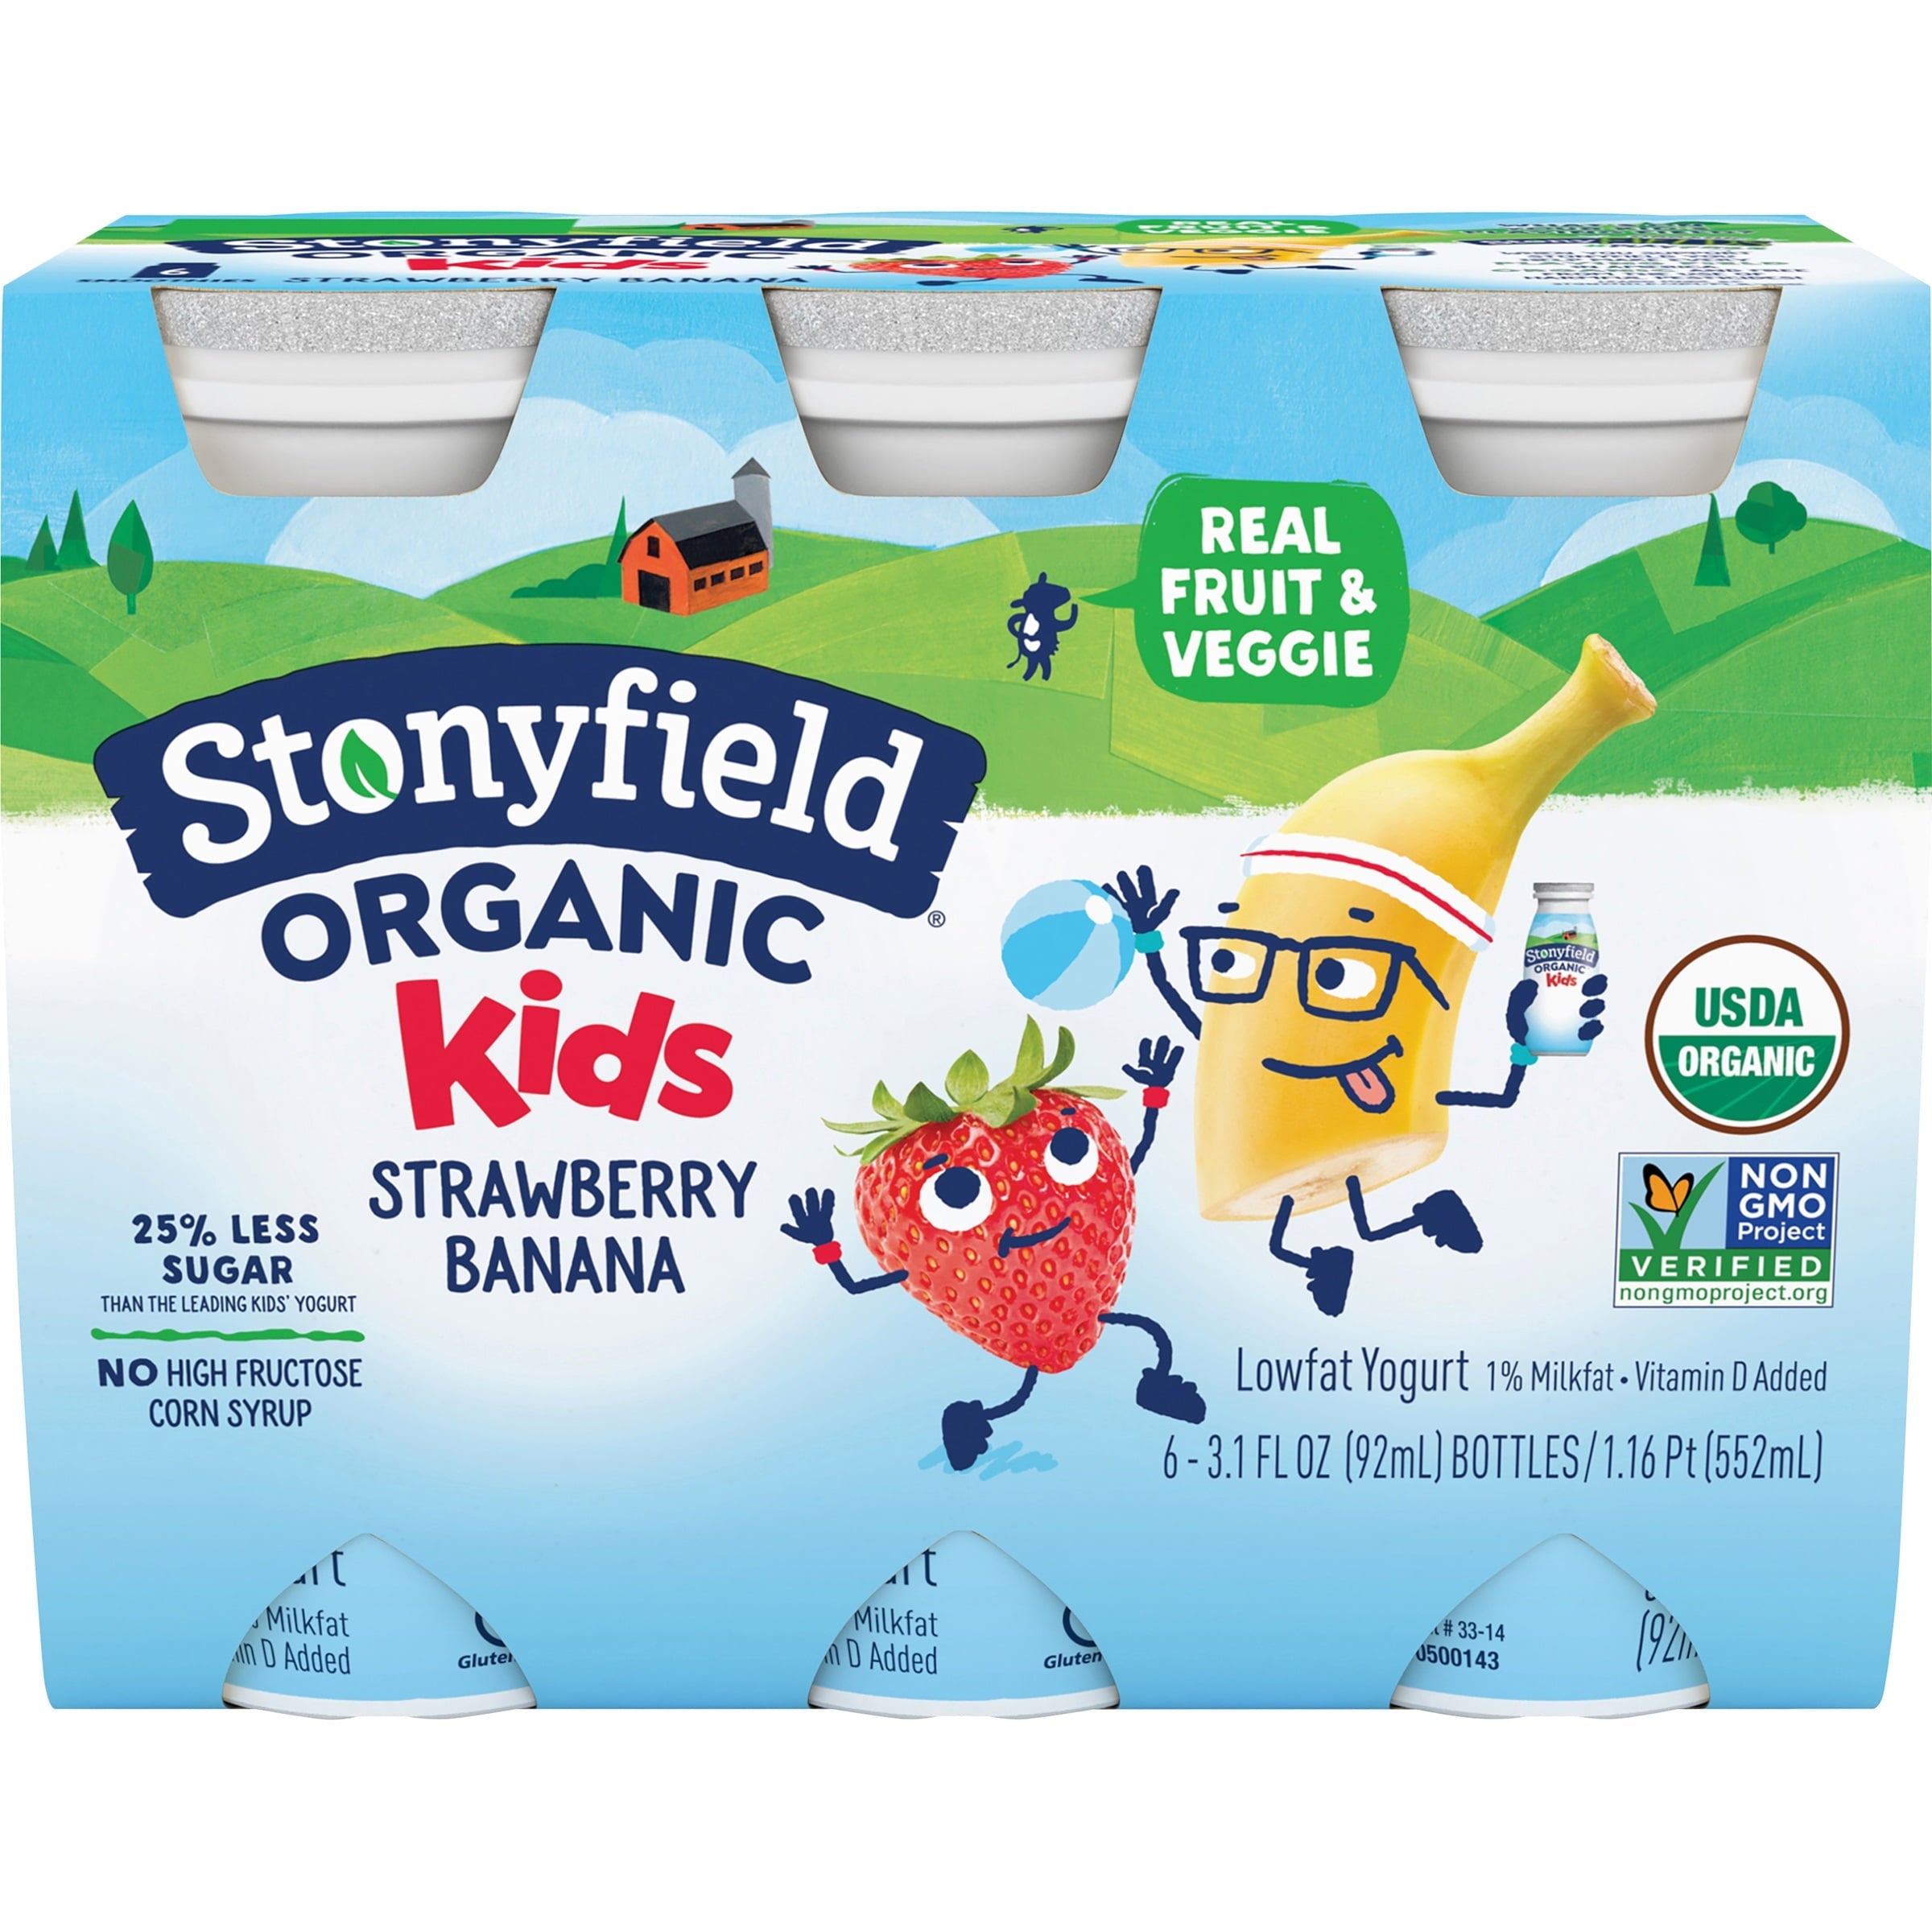 Stonyfield® Organic Kids Strawberry Banana Lowfat Yogurt Pouch Smoothies